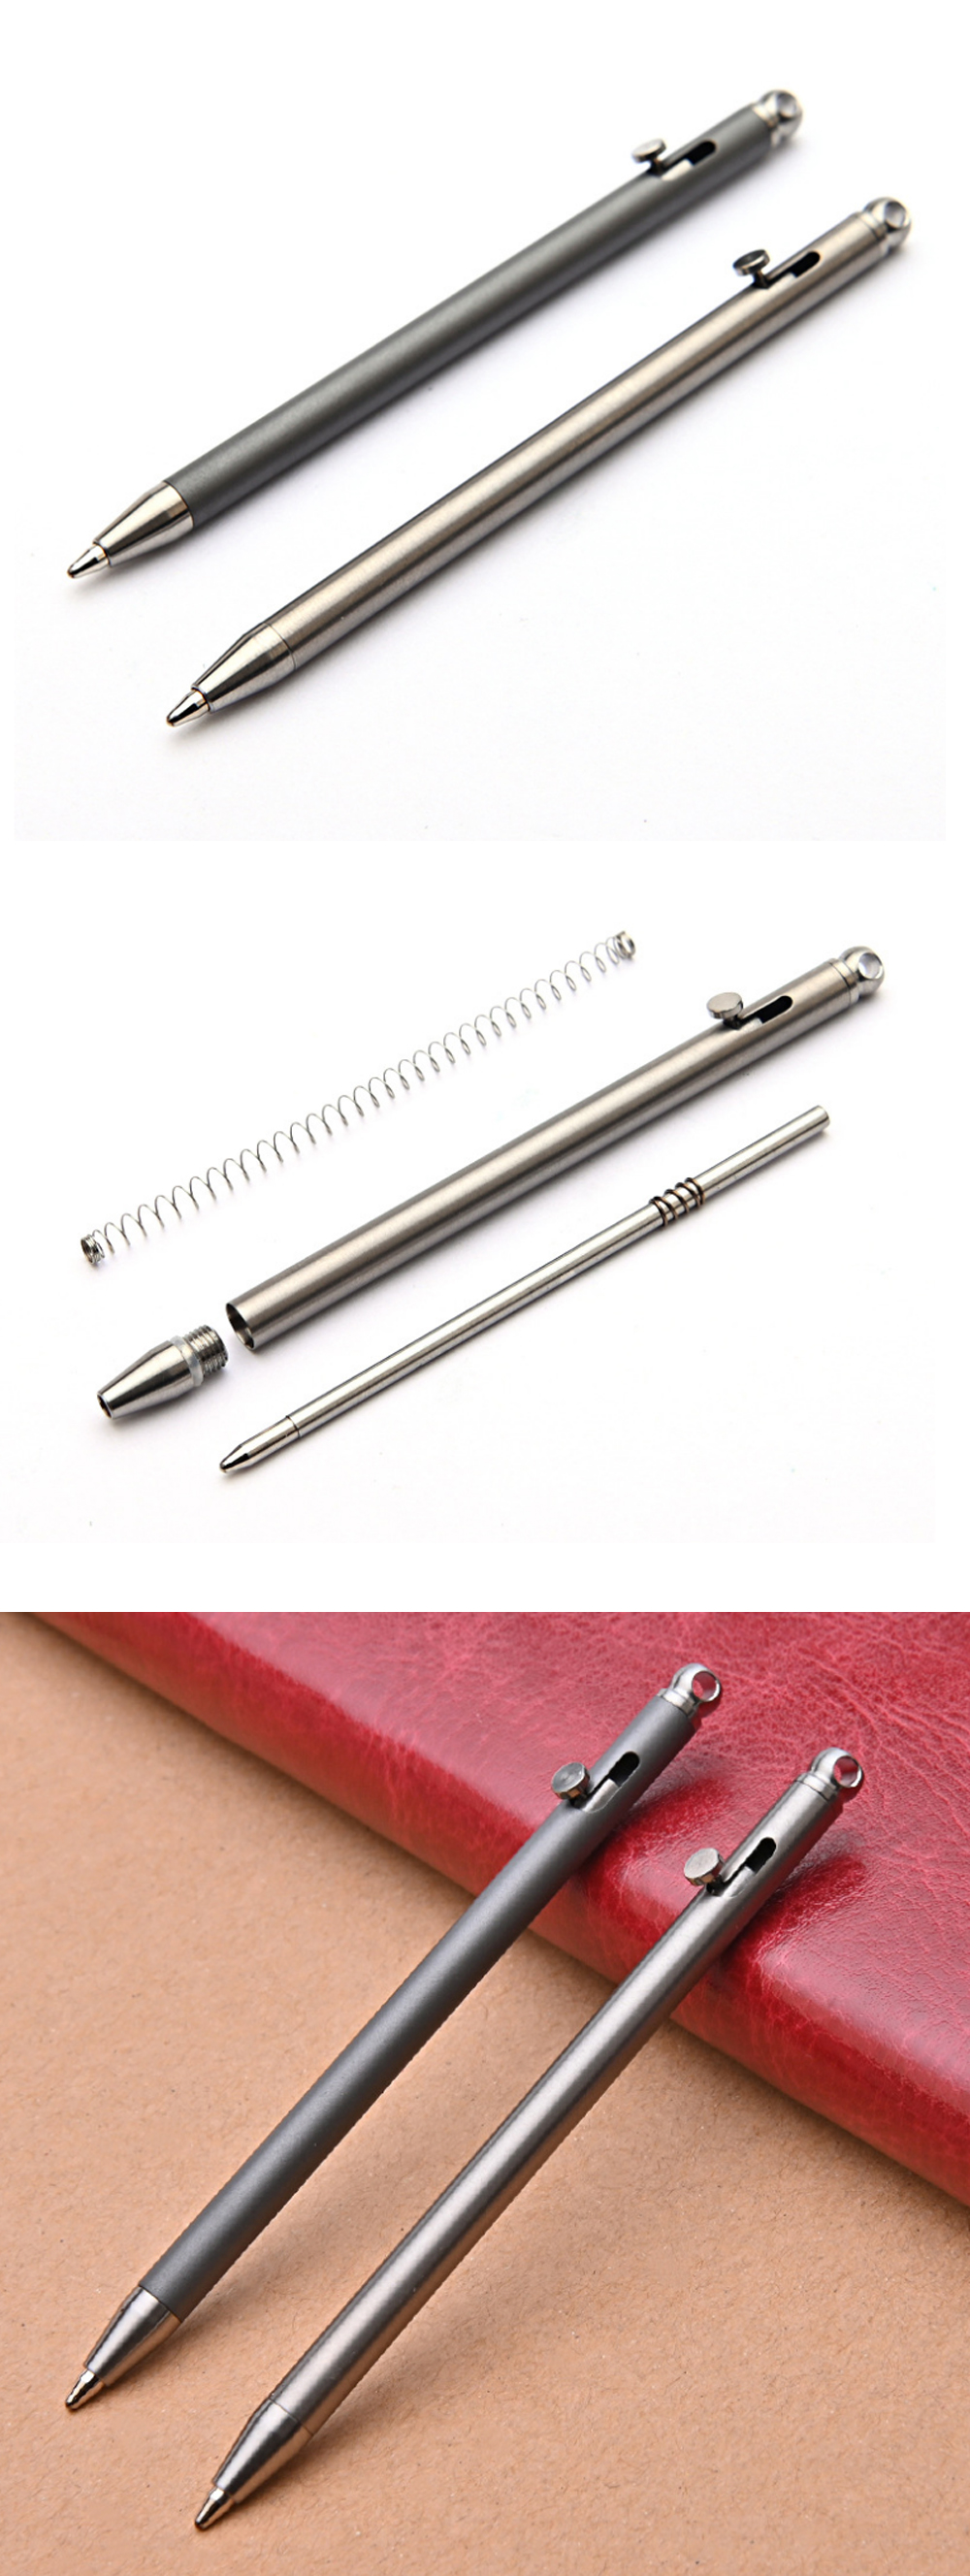 XANESreg-EDC-Titanium-Pen-Mini-Tactical-Key-chain-Metal-Ballpoint-Signature-Bolt-Pen-Outdoor-Camping-1806025-2